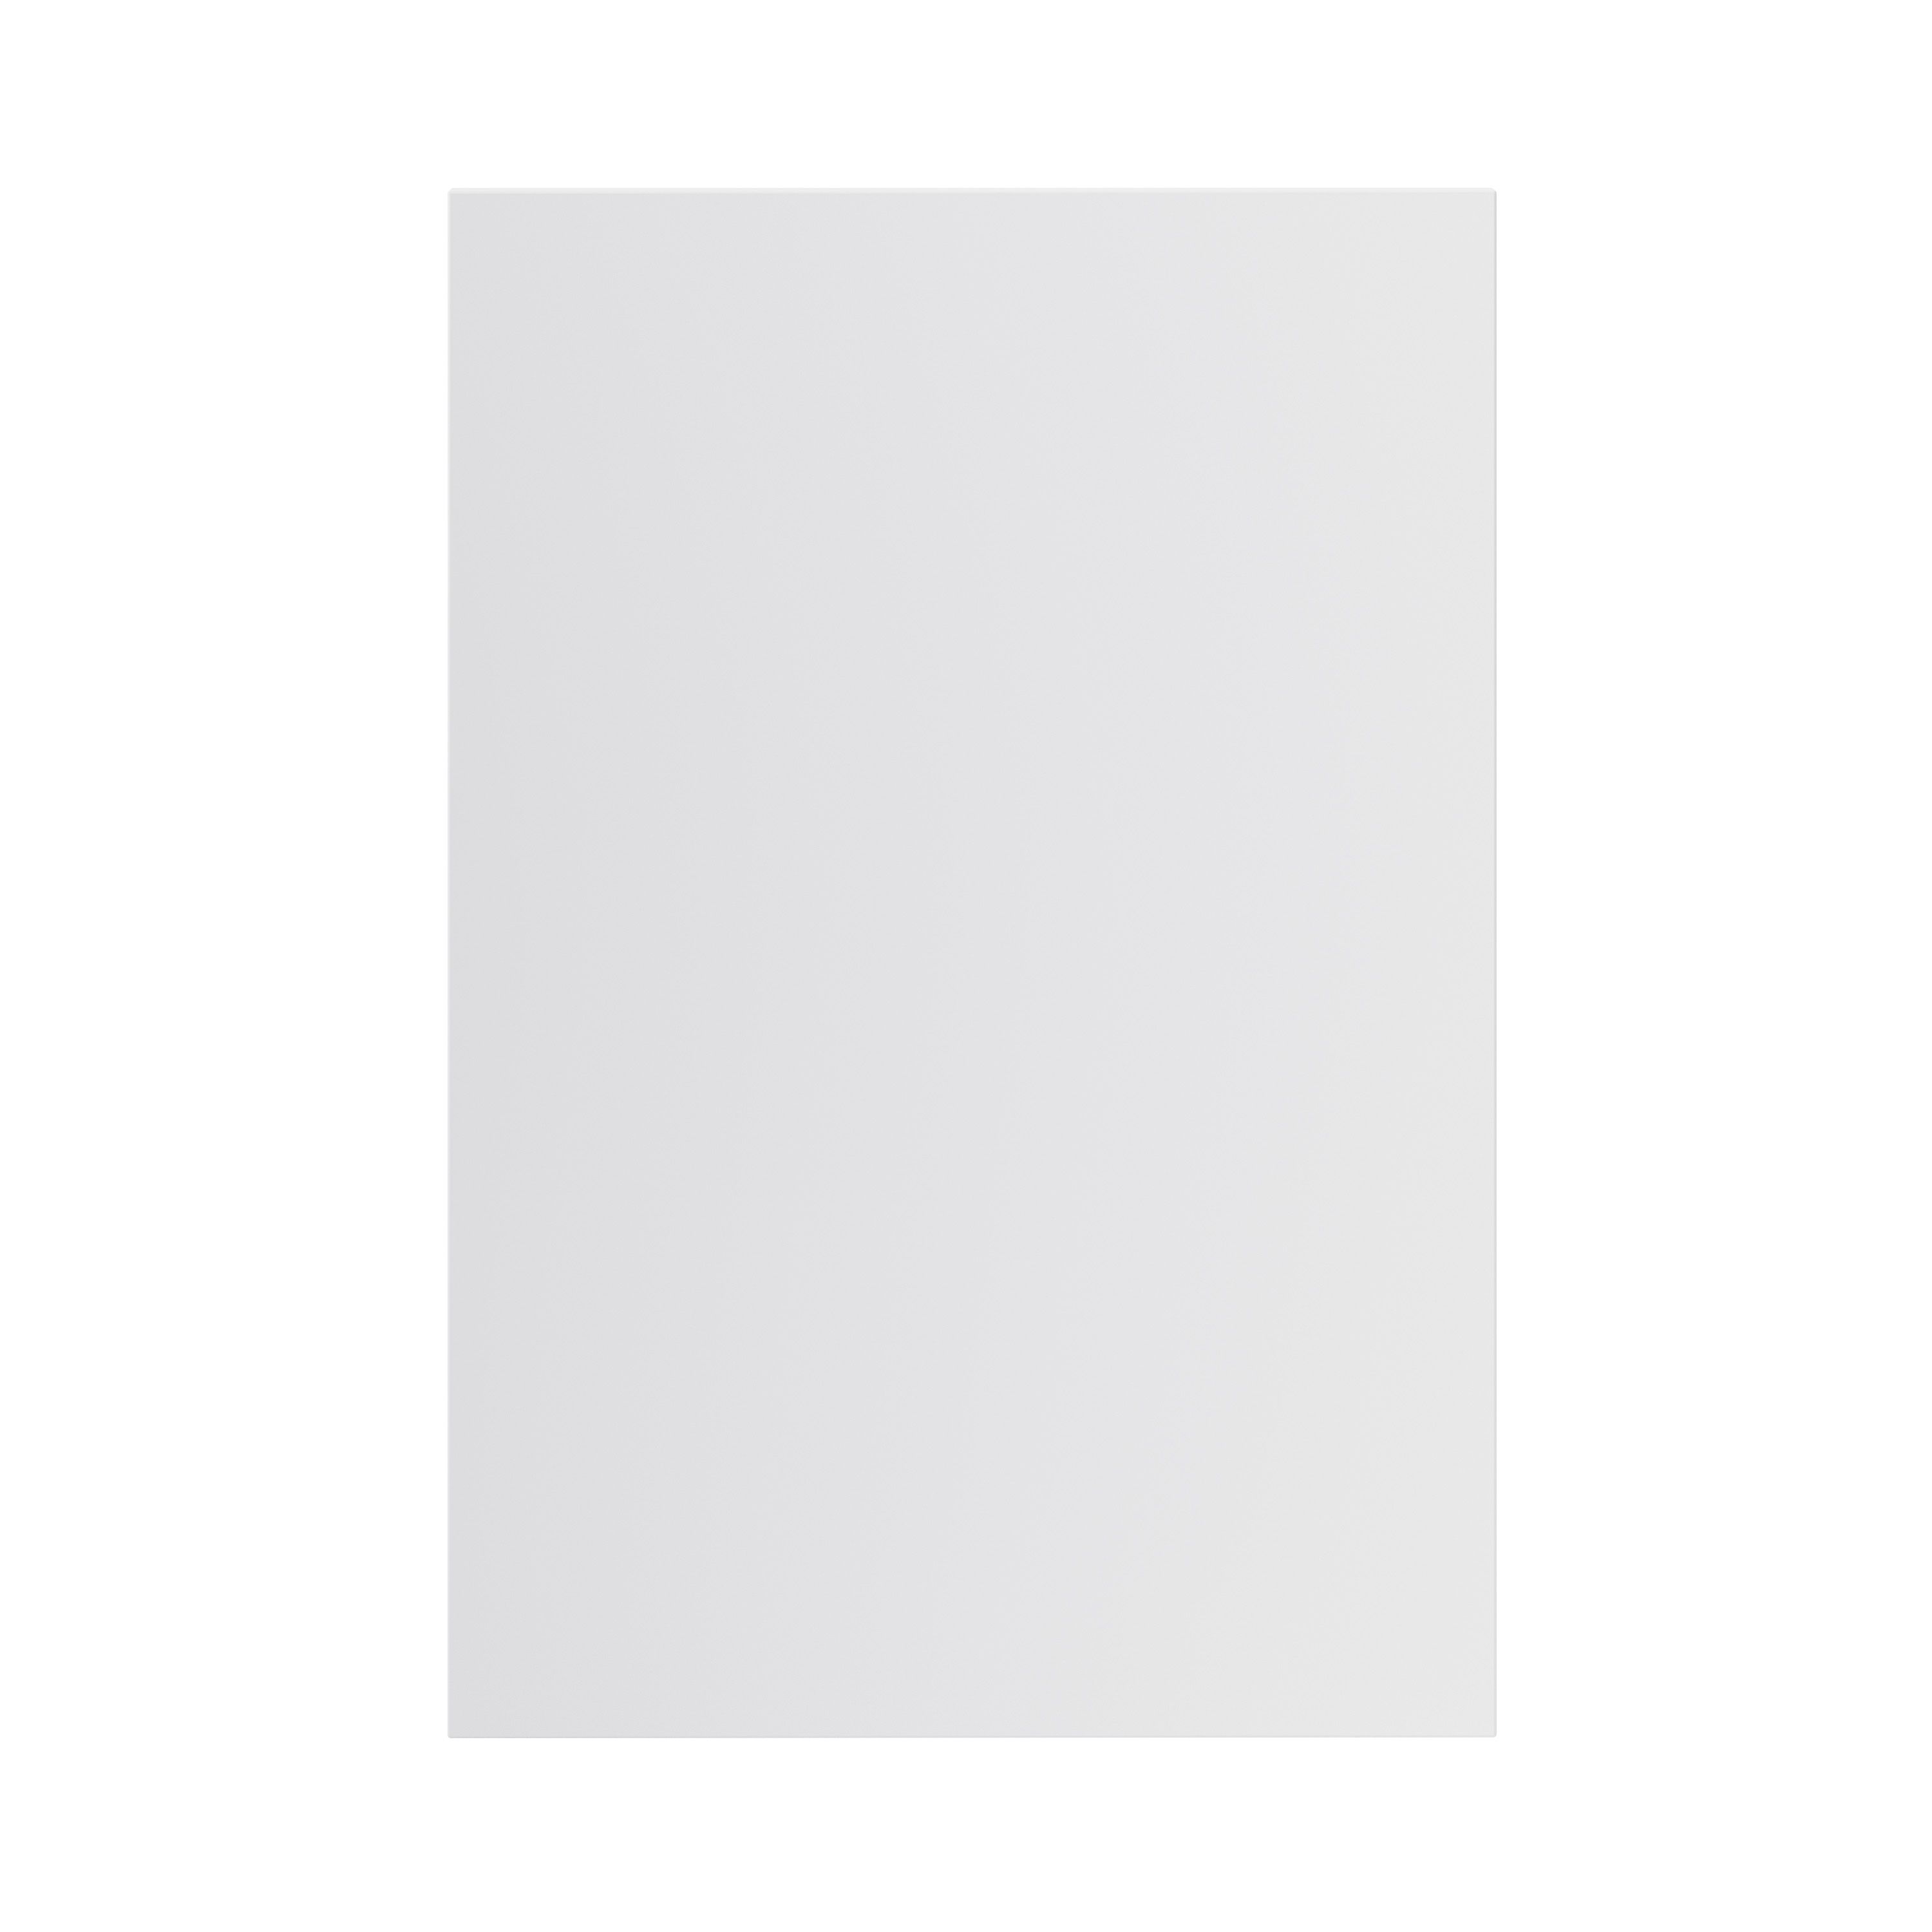 GoodHome Garcinia Gloss light grey slab End panel (H)870mm (W)590mm